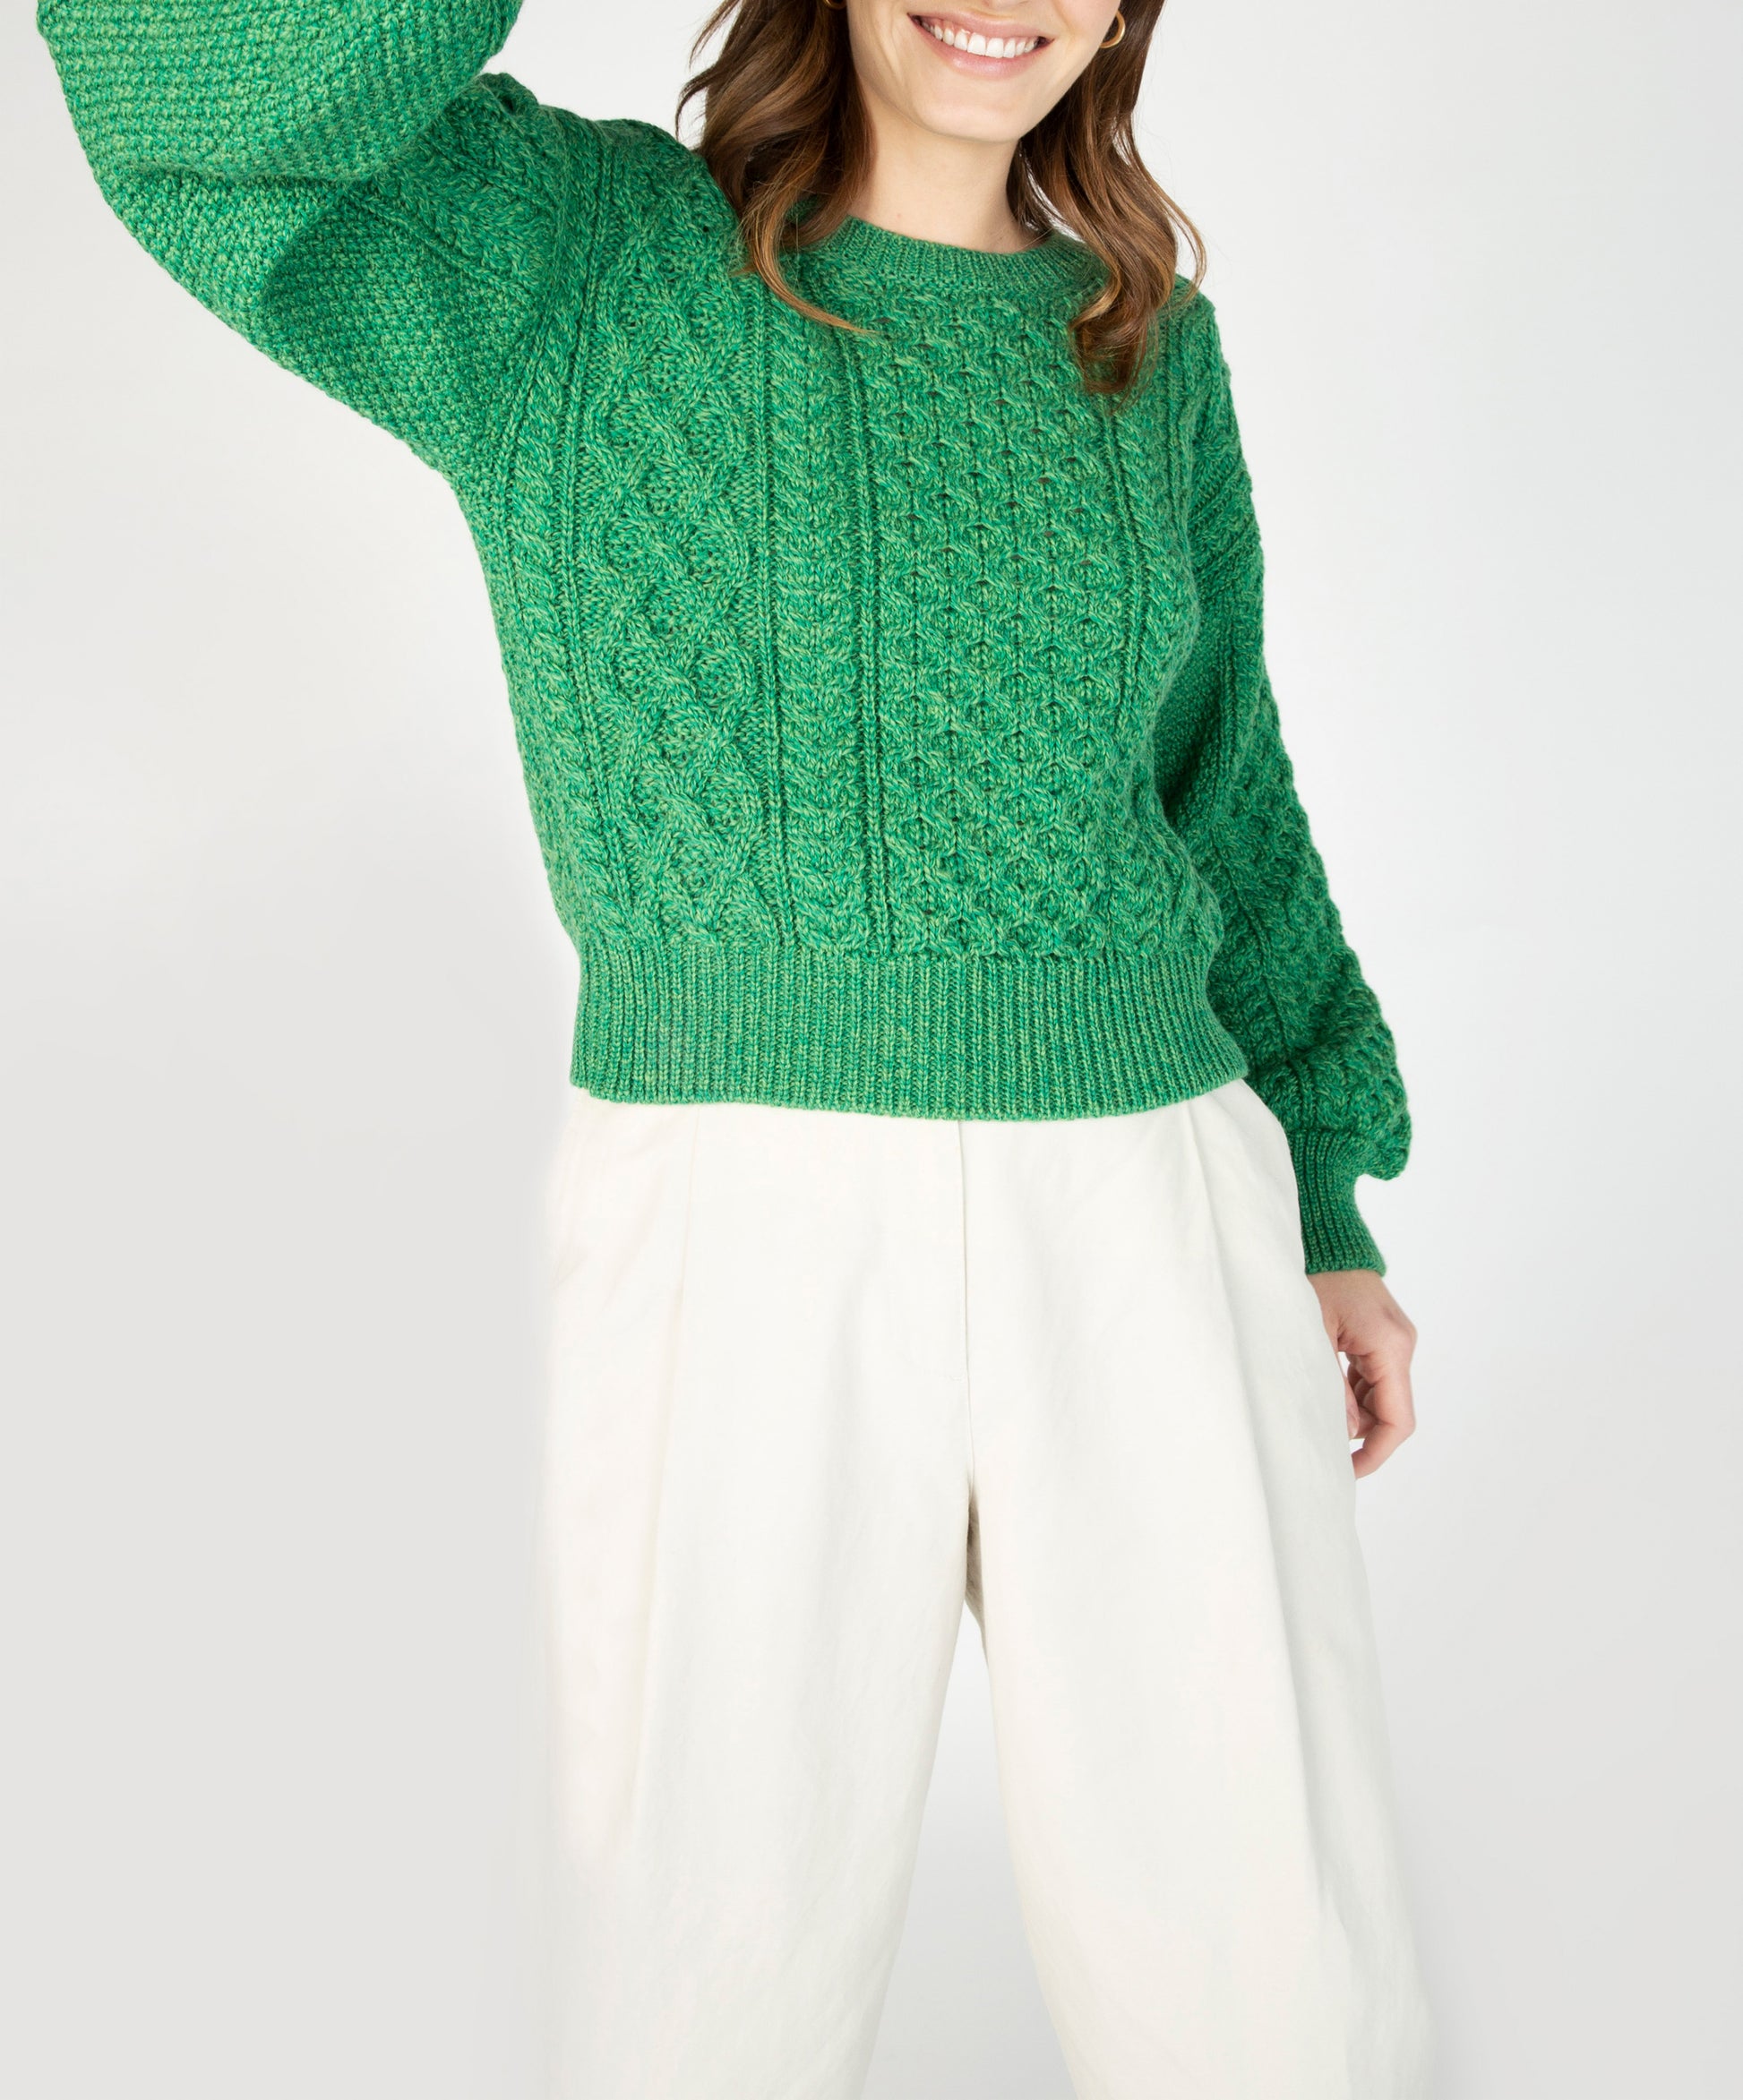 IrelandsEye Knitwear Honeysuckle Cropped Aran Sweater Green Marl